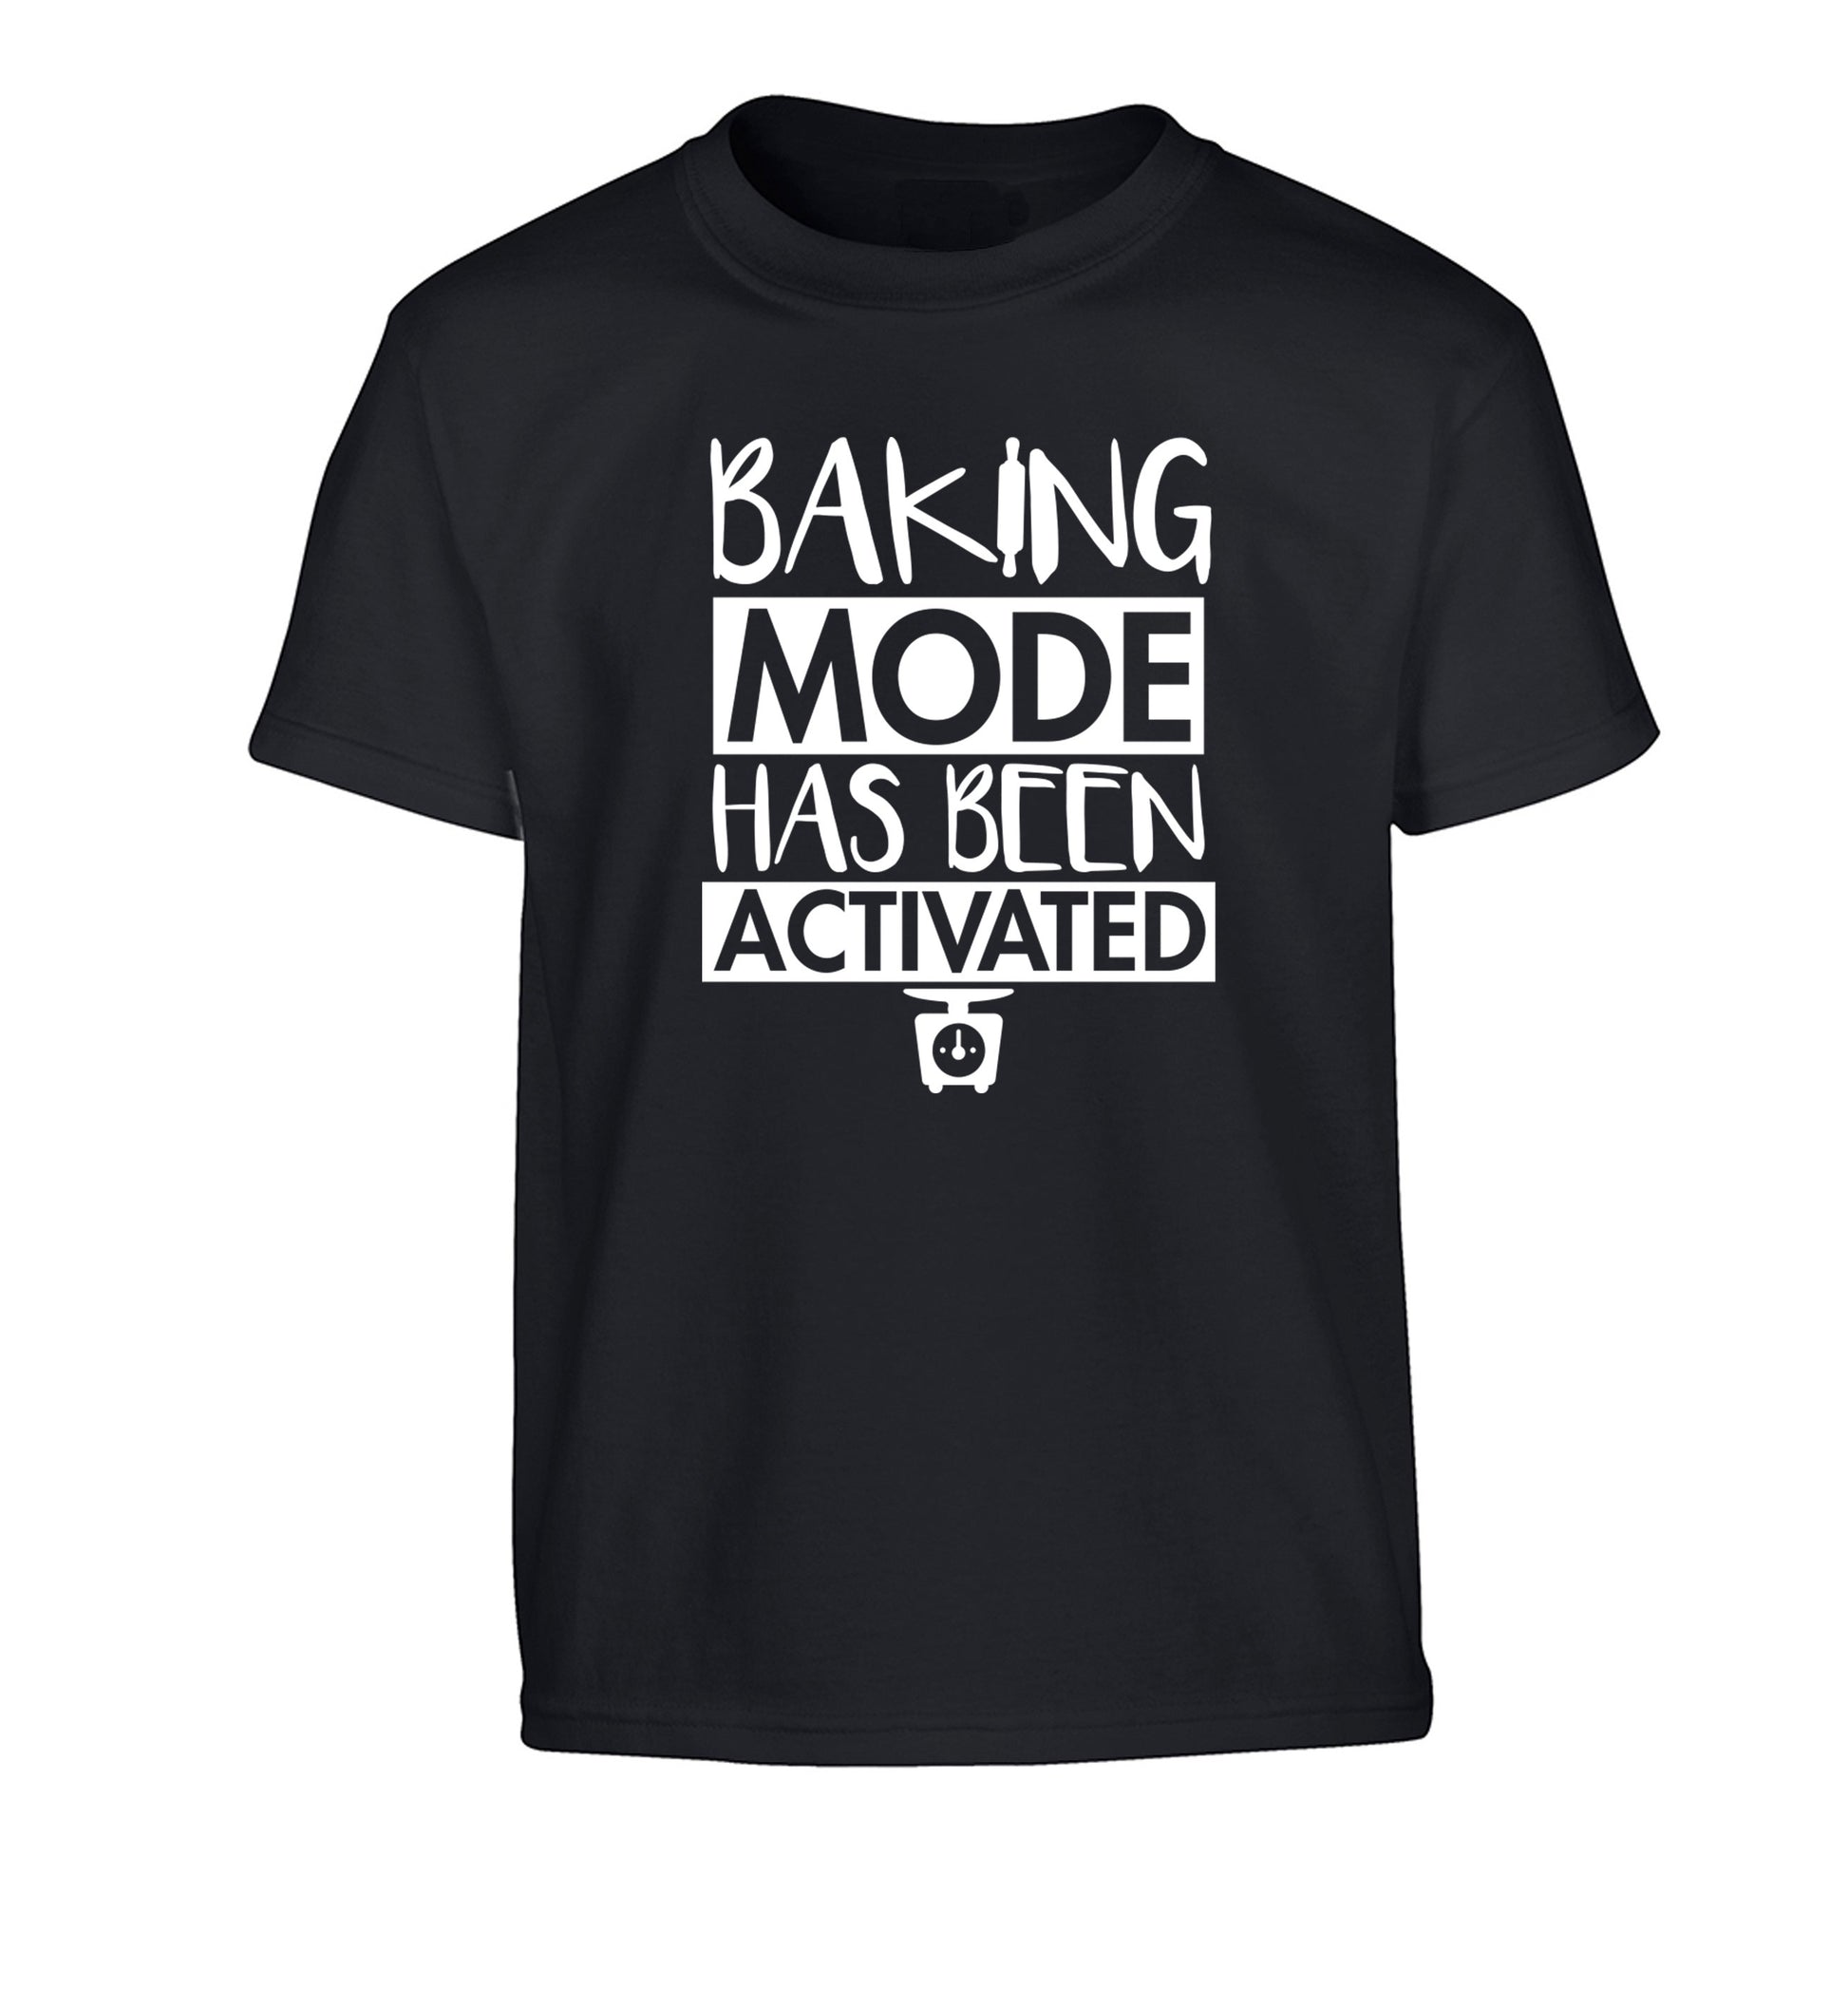 Baking mode has been activated Children's black Tshirt 12-14 Years